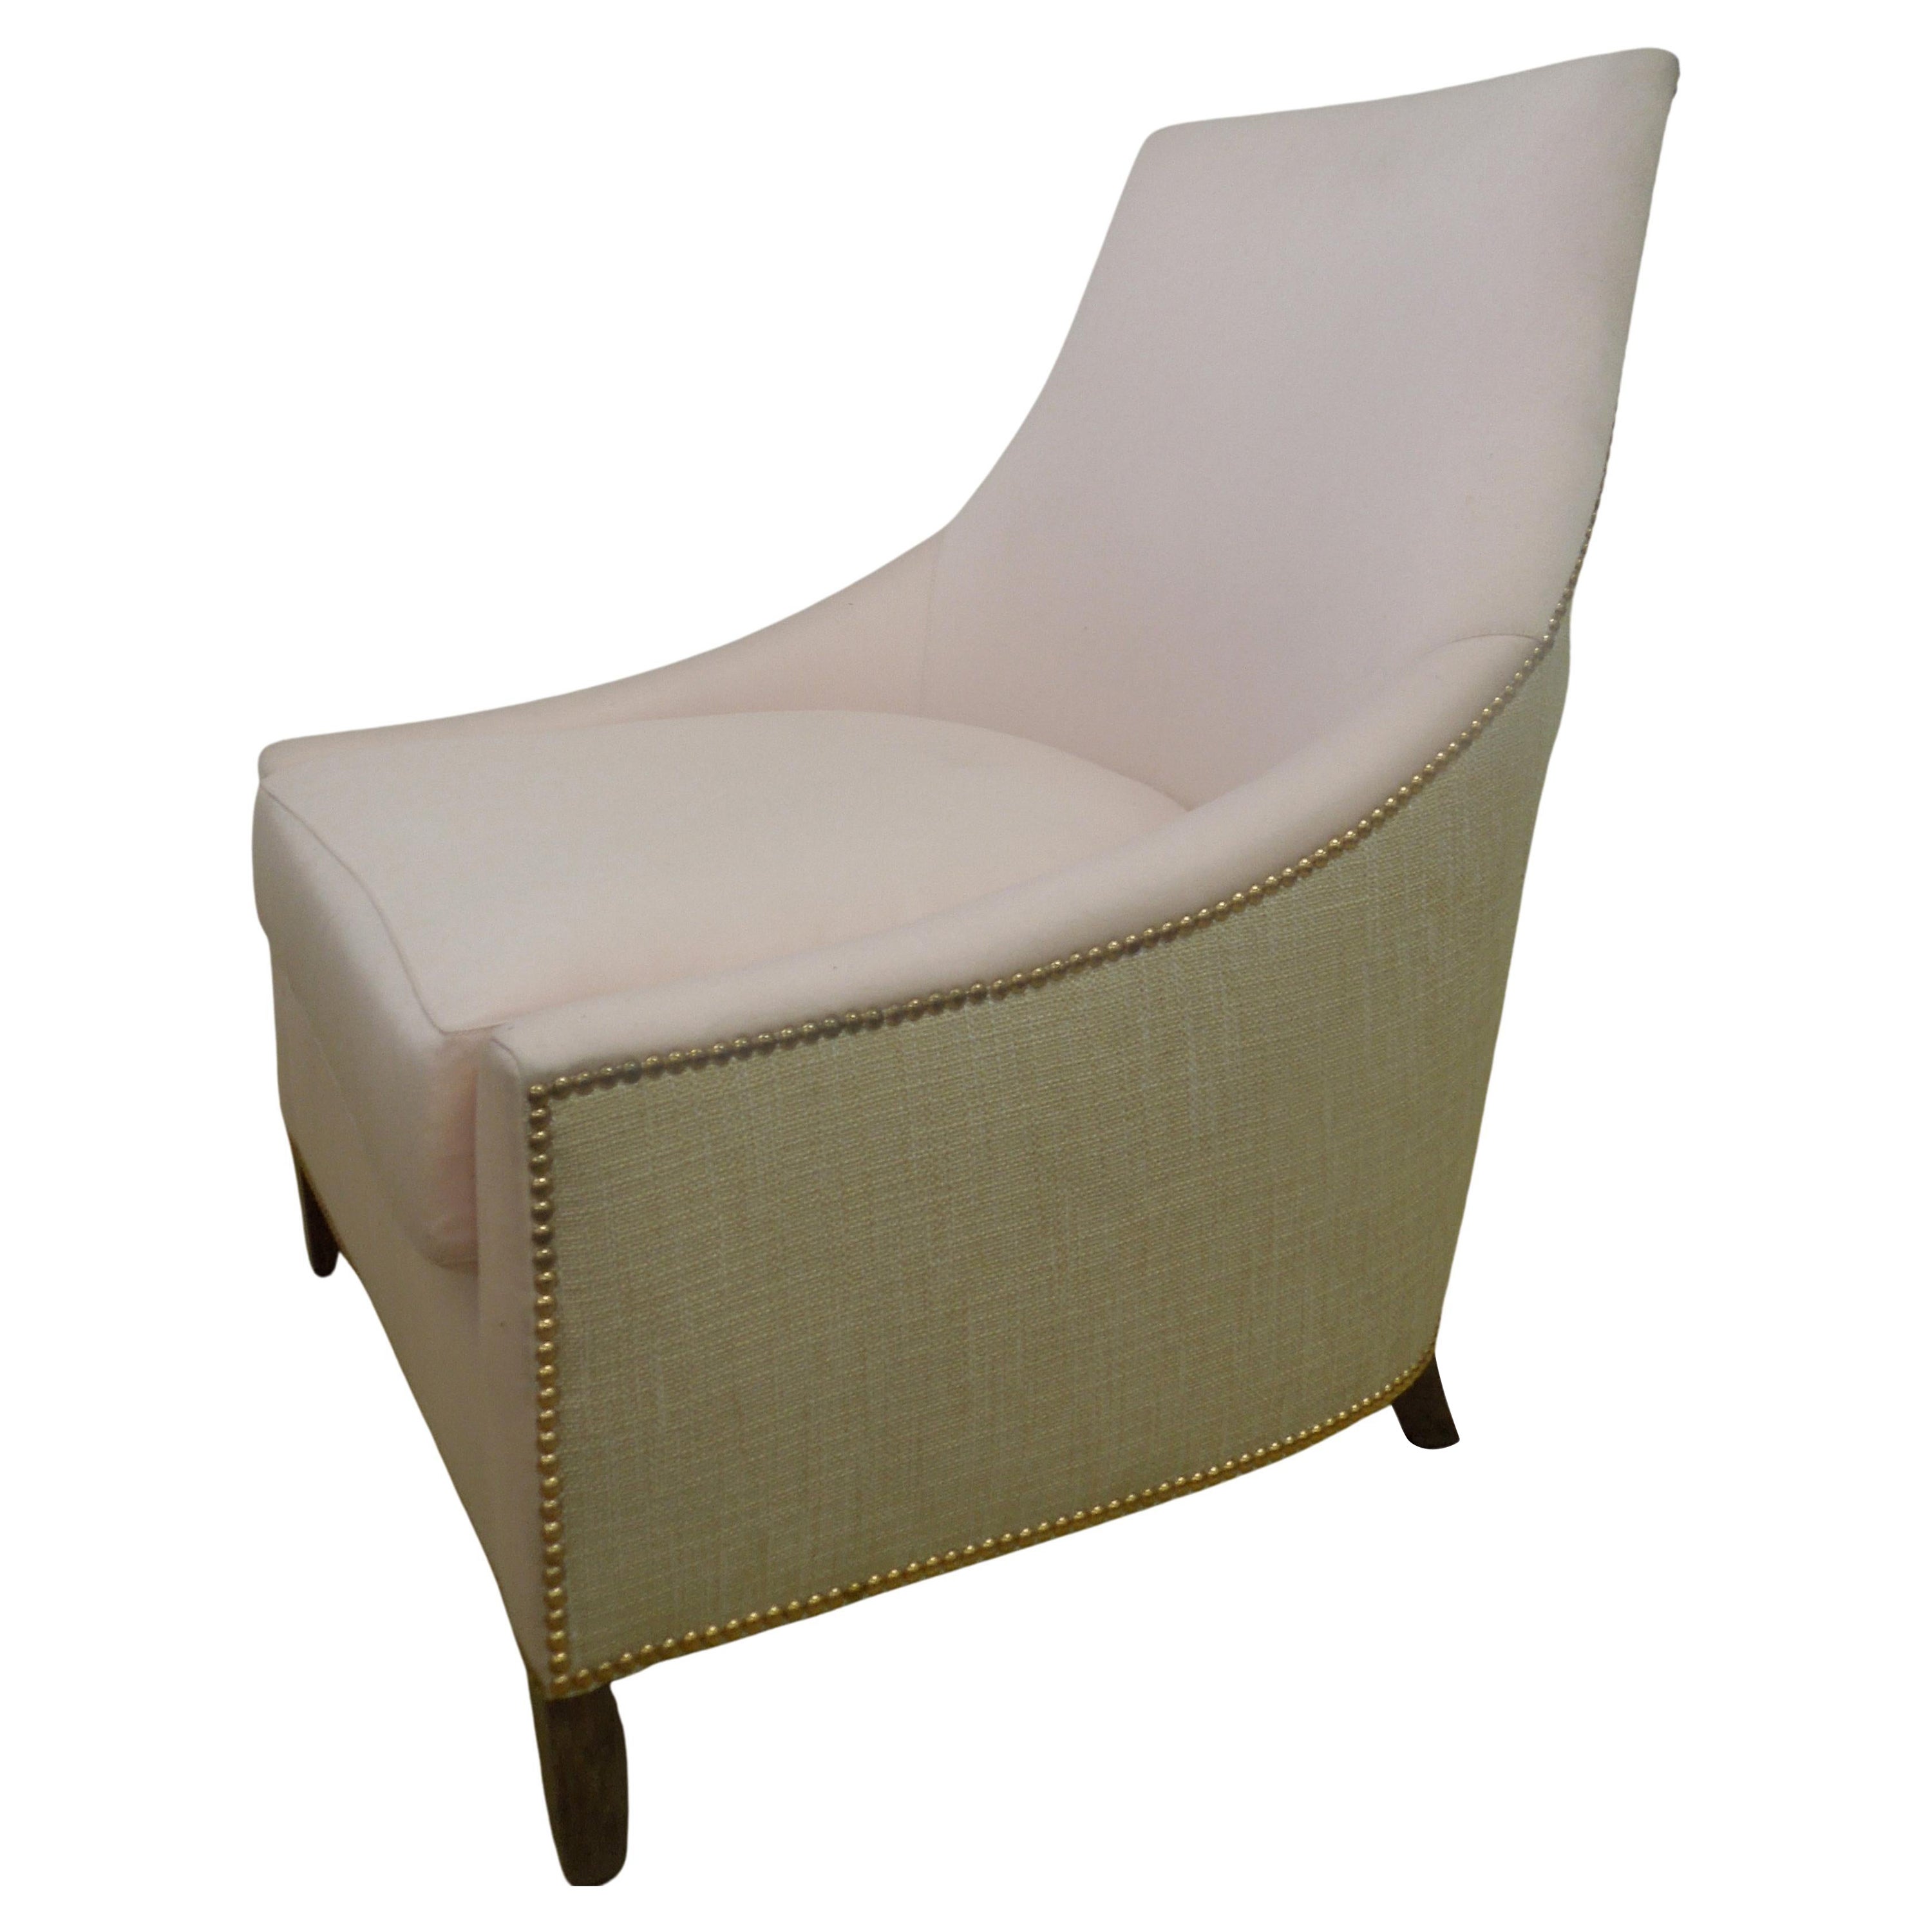  Fauteuil/chaise moderne « Fashionista » en tissu rose et lin brun clair en vente